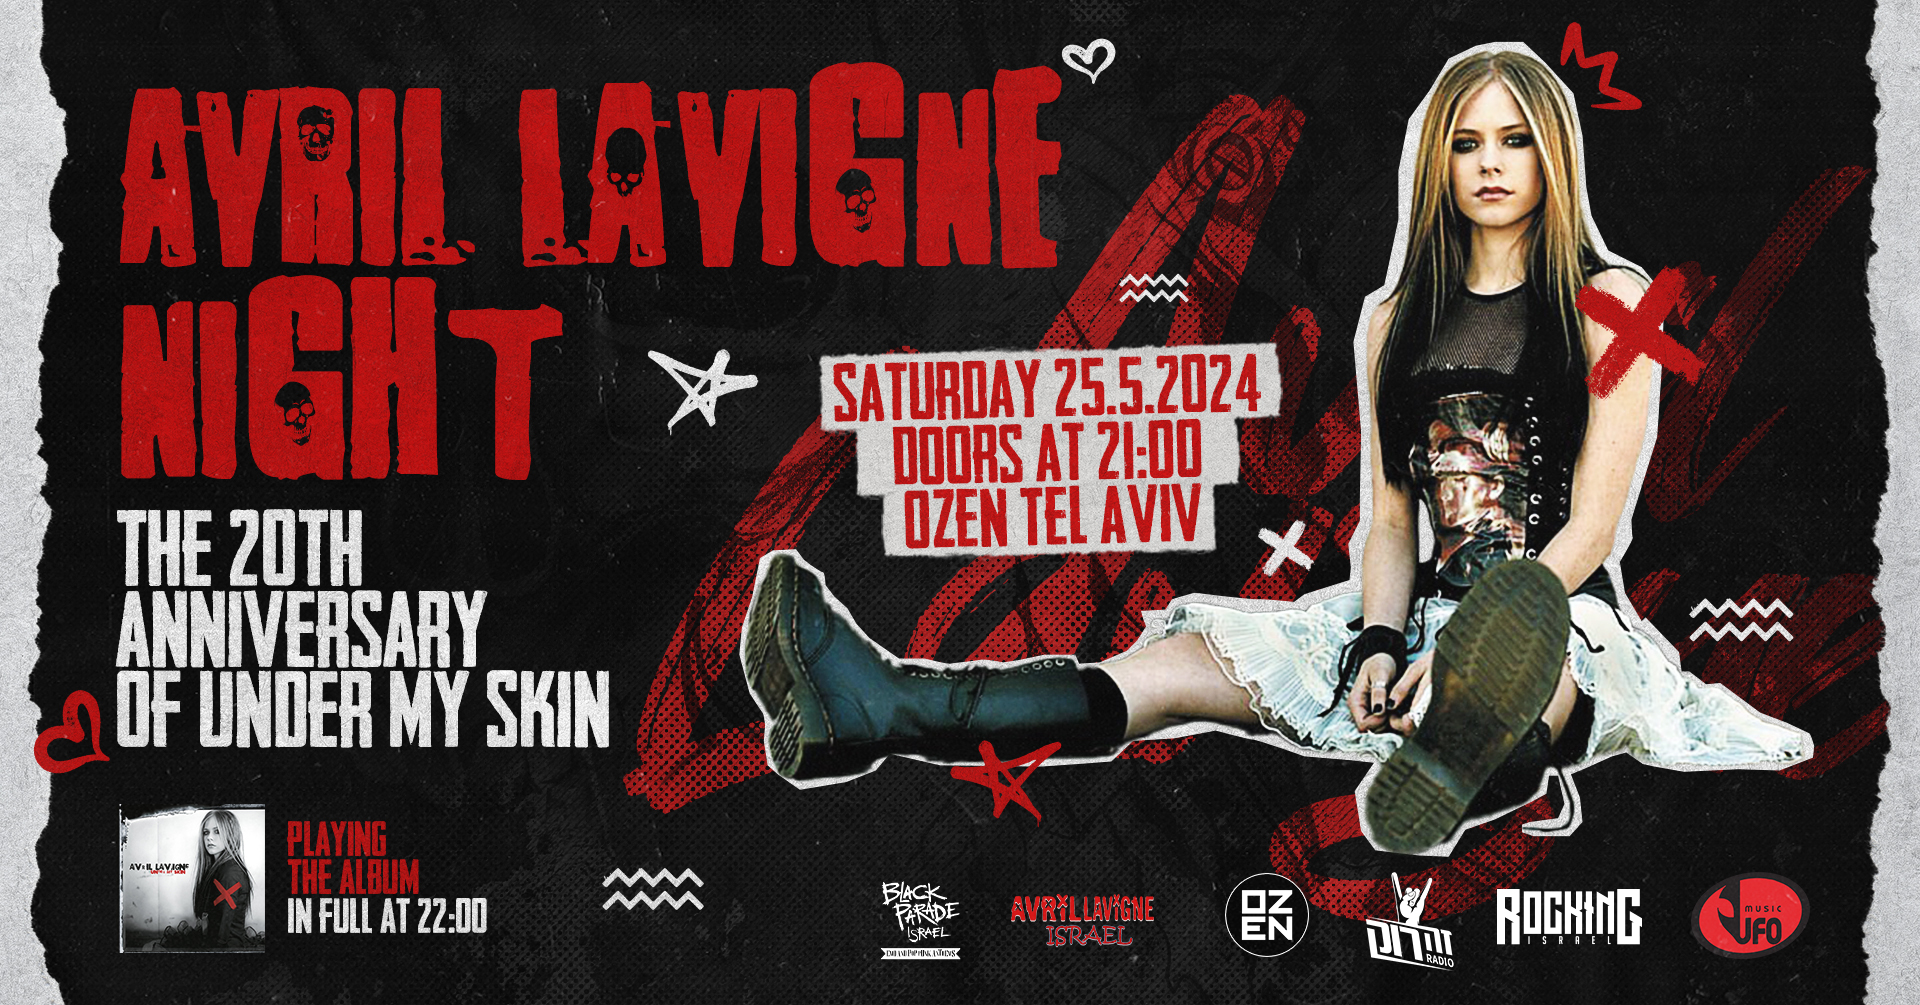 Avril Lavigne Night: The 20th Anniversary Of Under My Skin